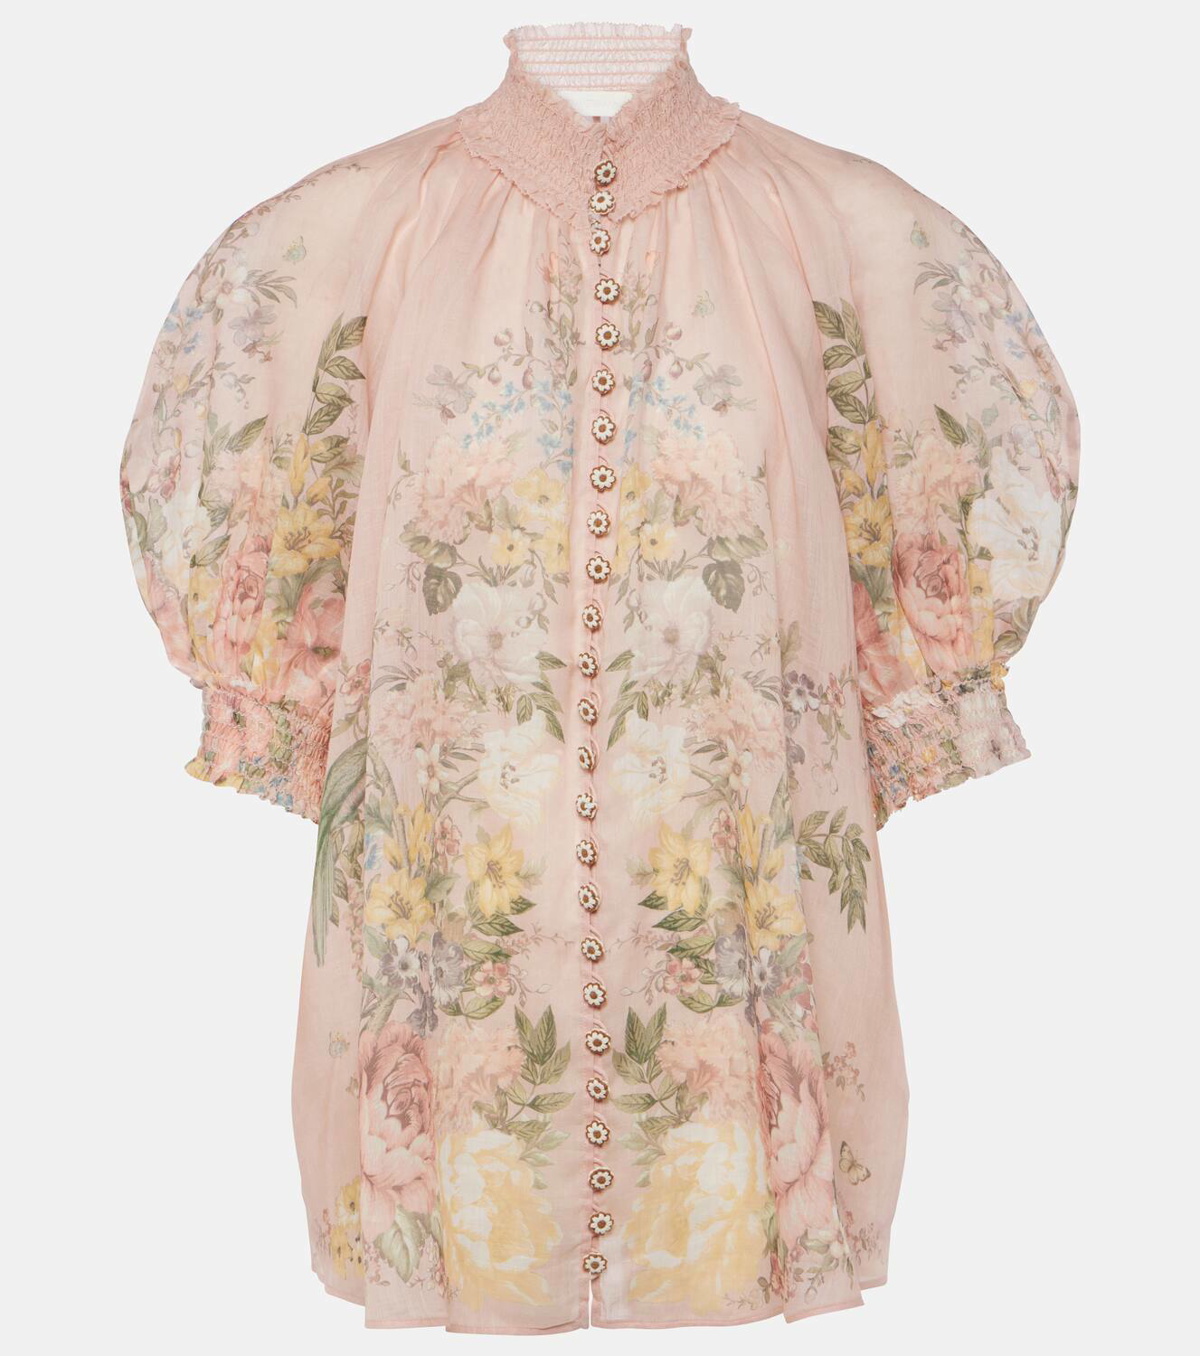 Zimmermann Waverly floral shirred ramie blouse